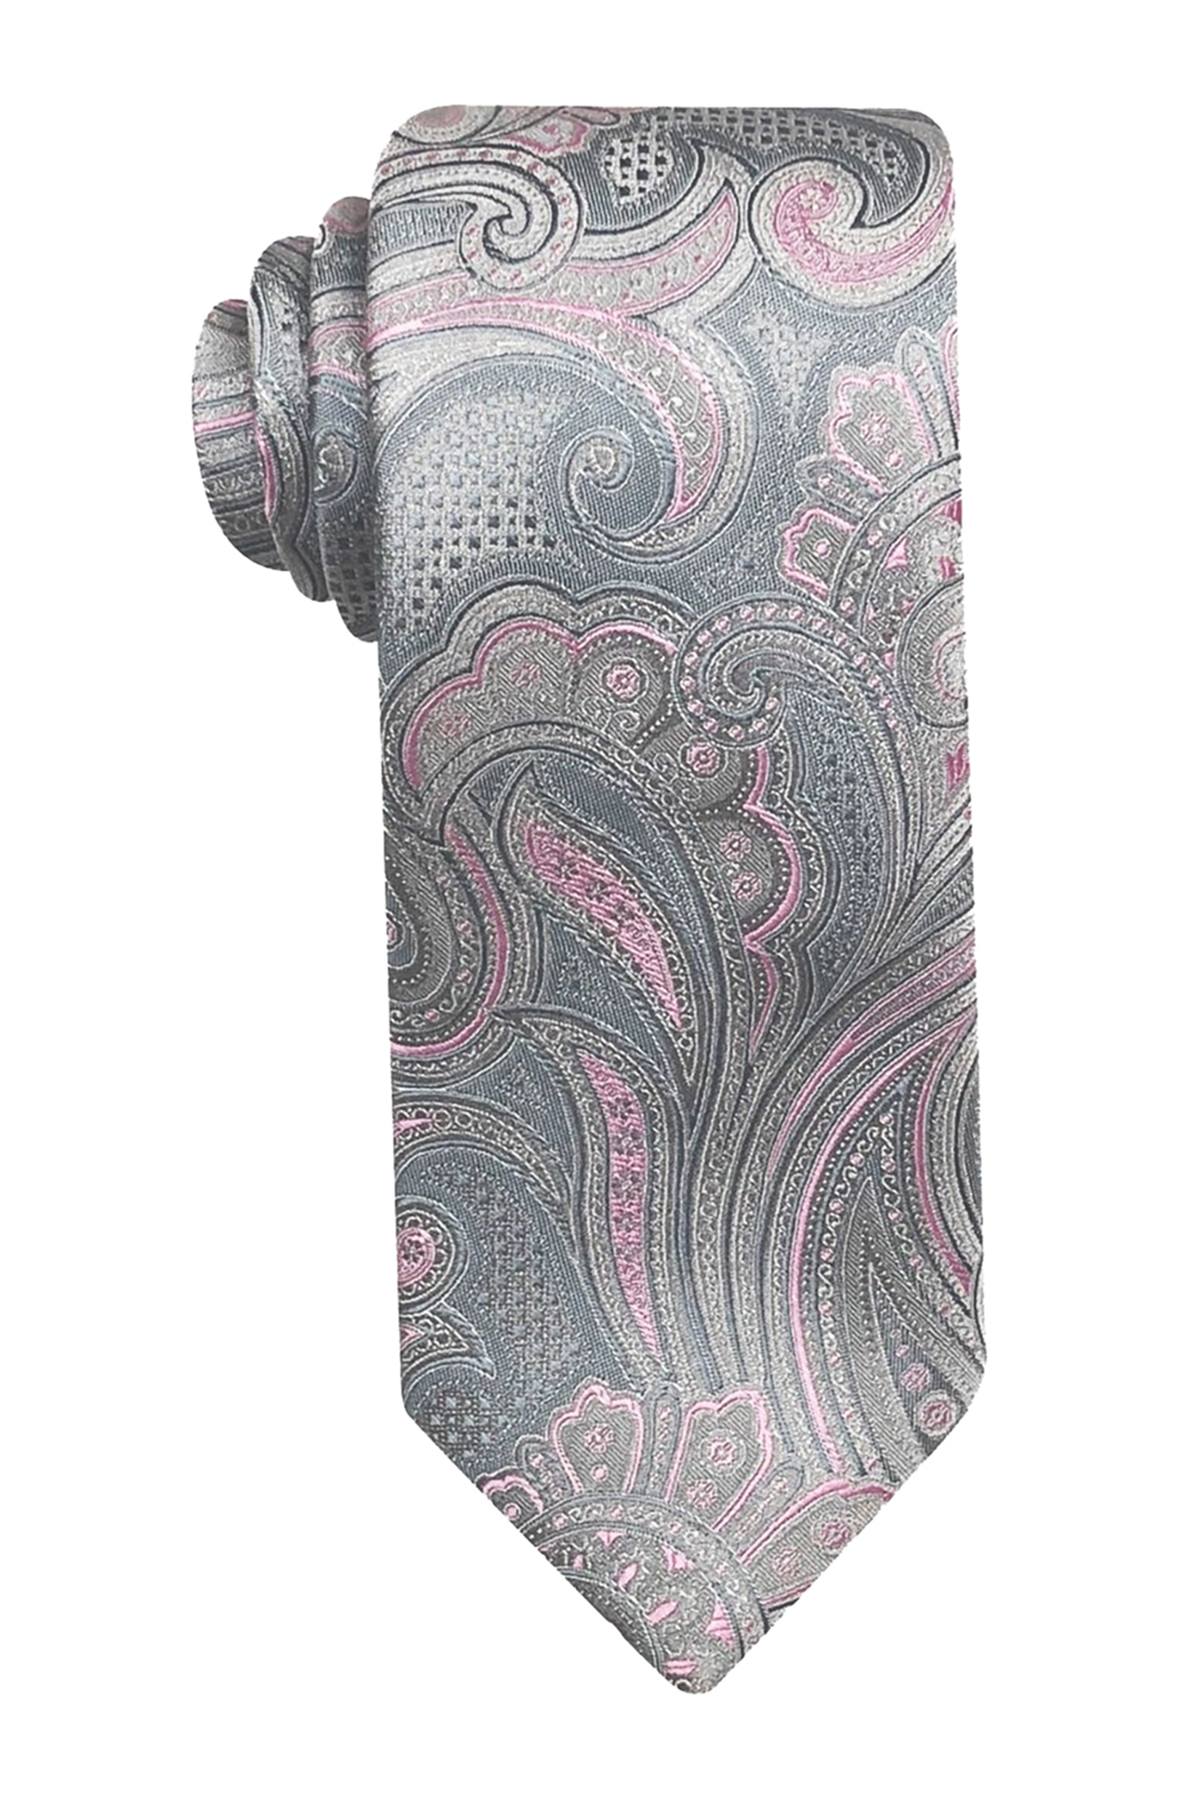 Susan G. Komen Charcoal-Grey/Pink Paisley 'Knots for Hope' Necktie